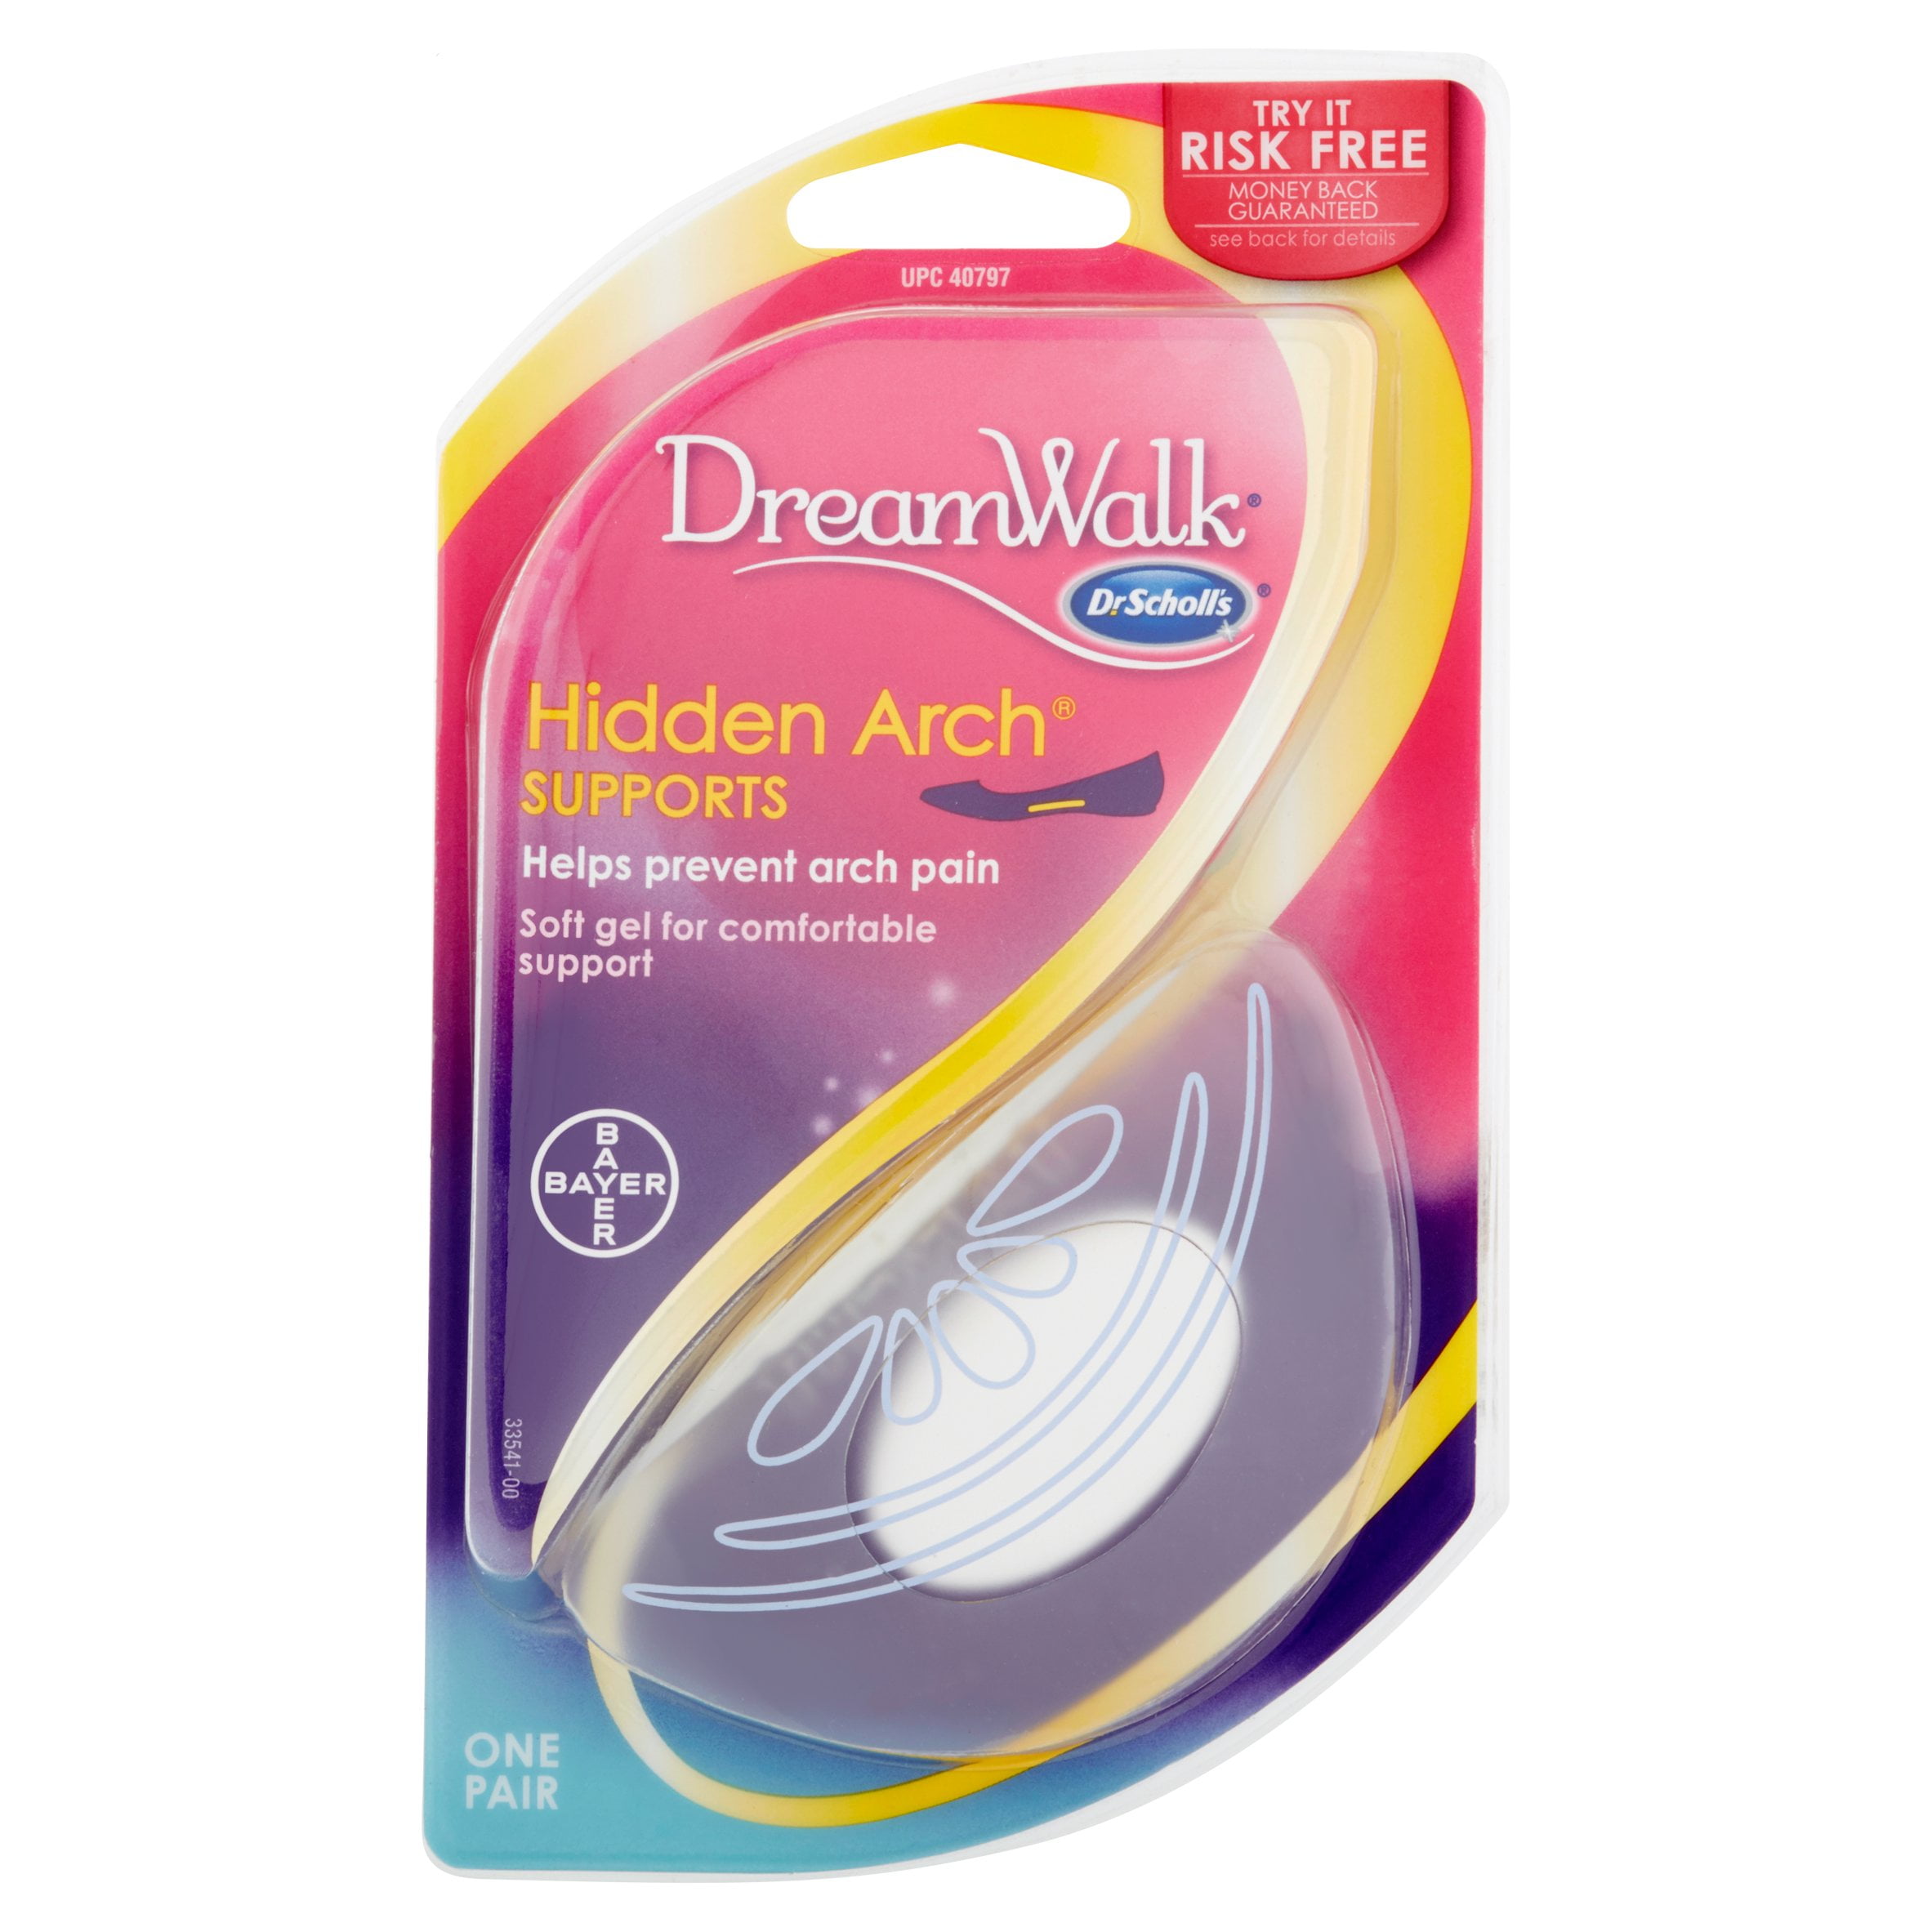 DreamWalk Hidden Arch Supports One Pair 